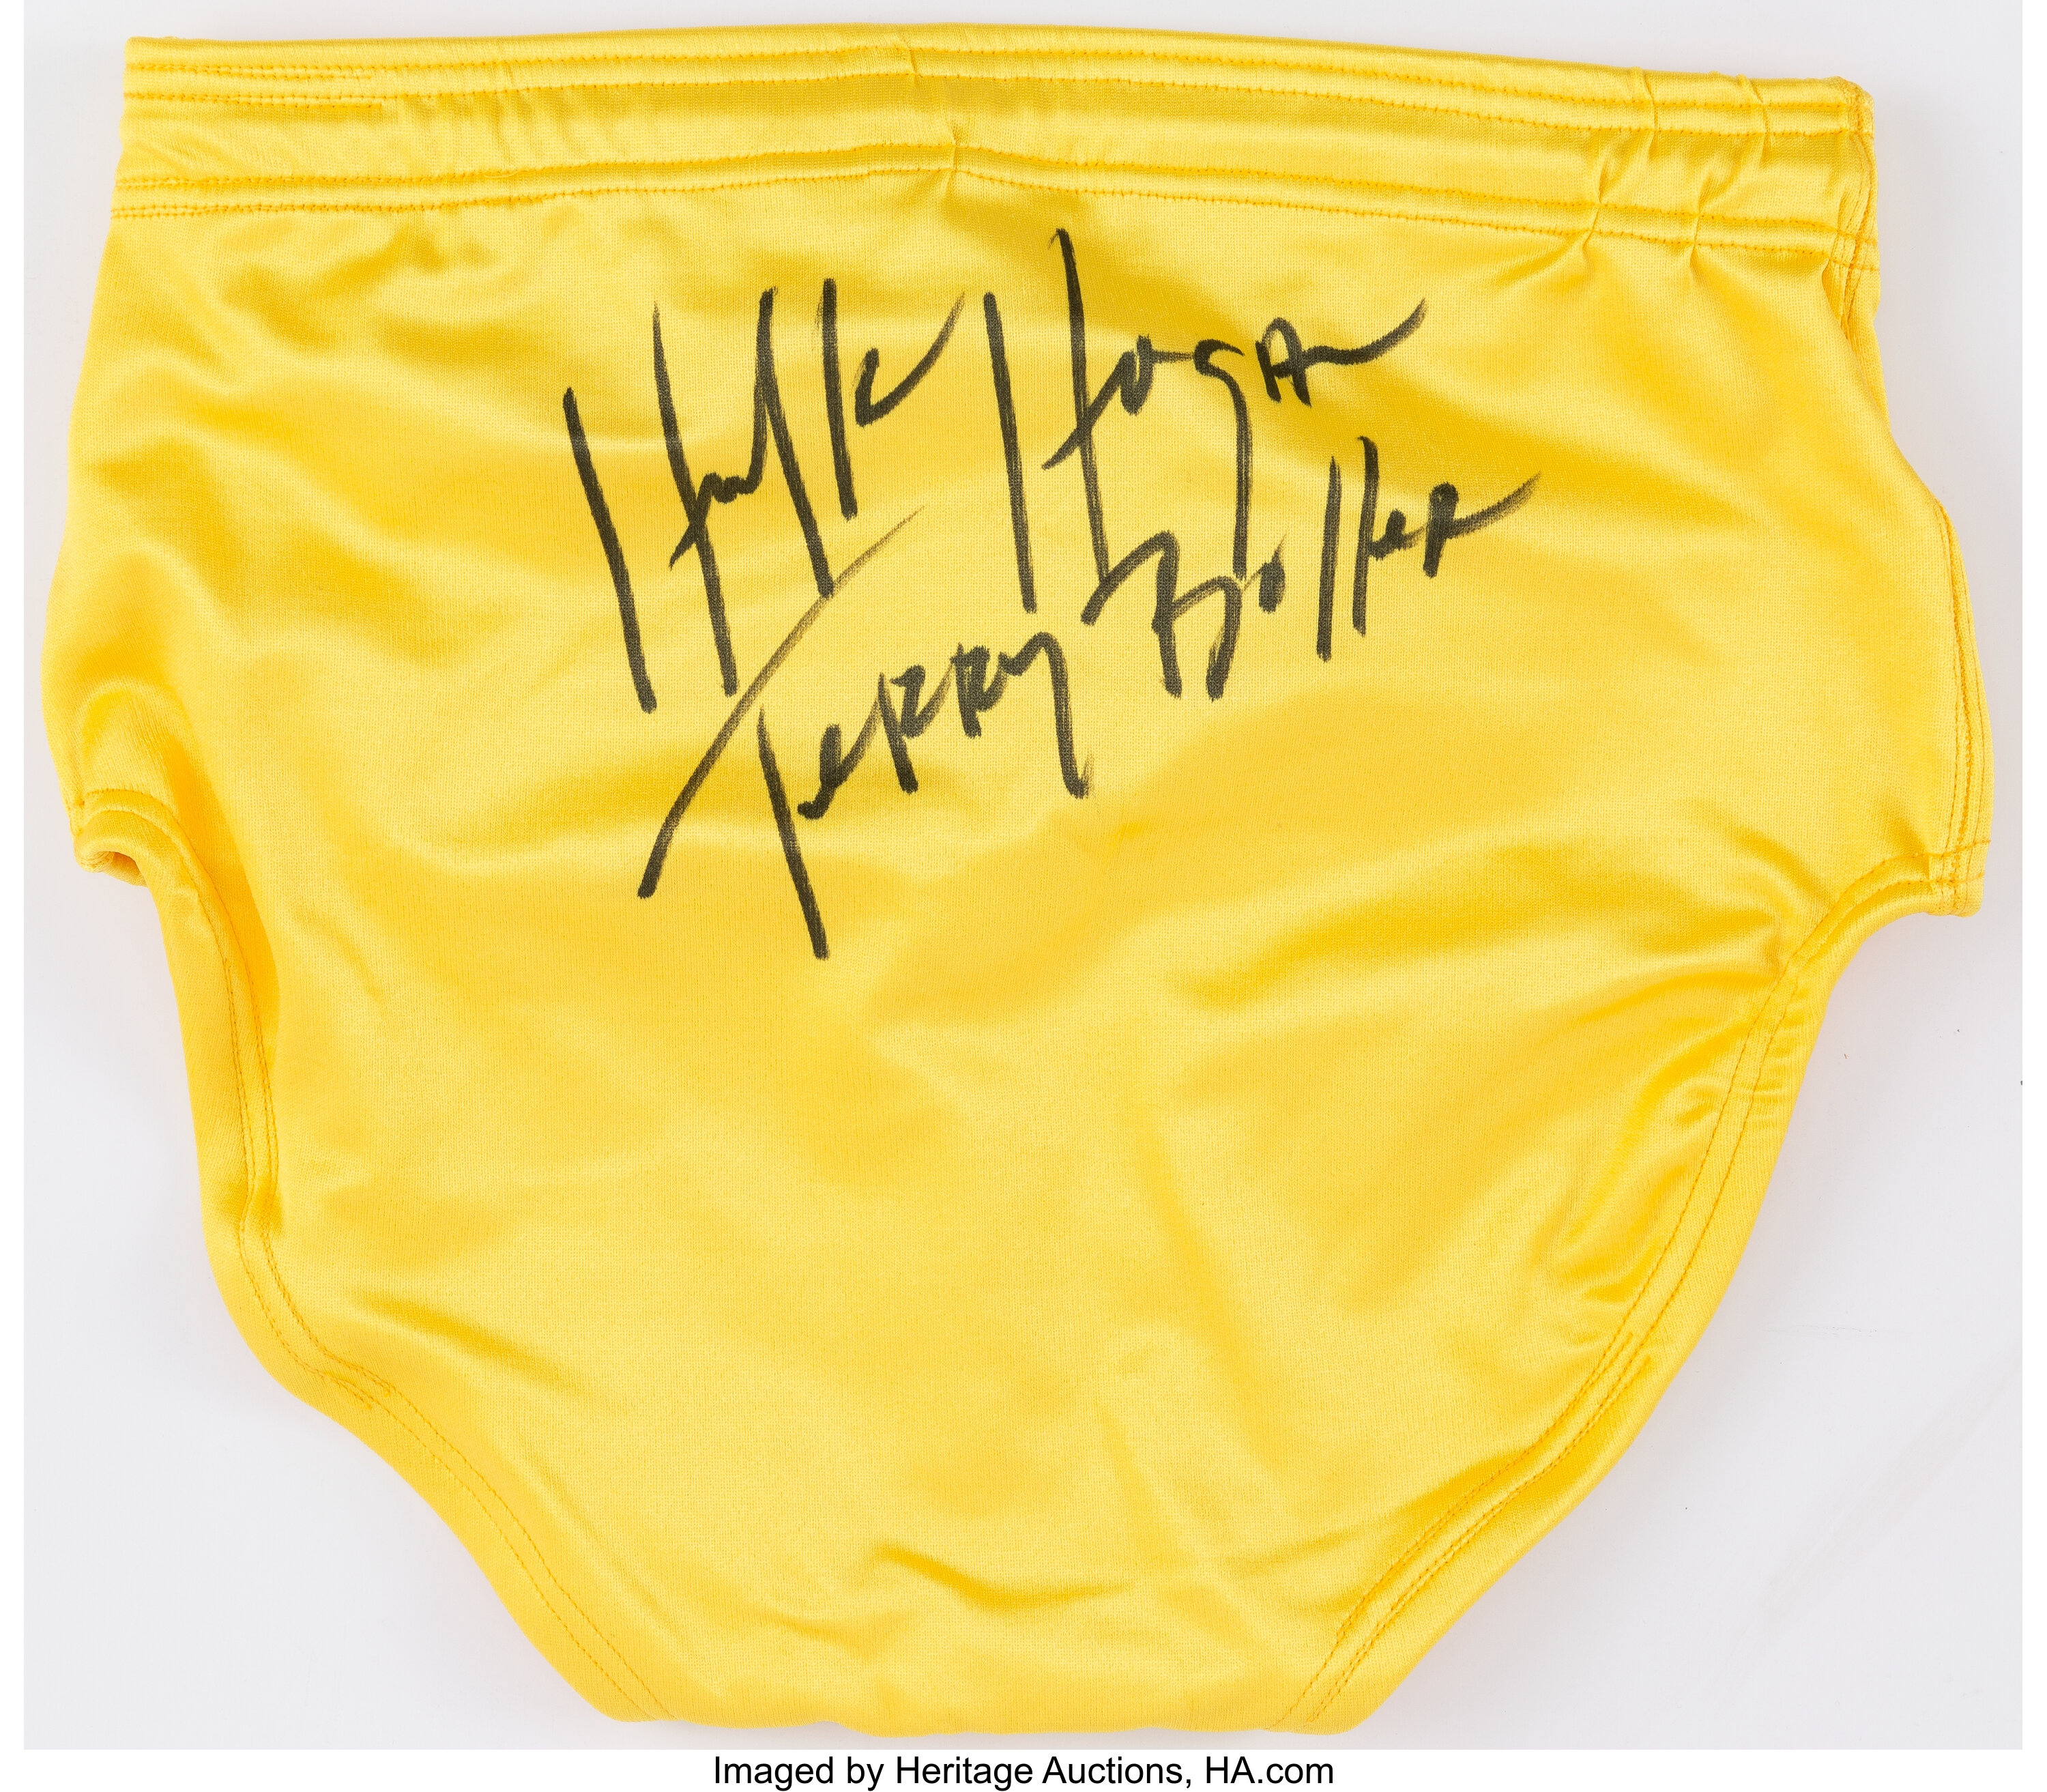 Fyrretræ Kære knap Terry Bollea "Hulk Hogan" Signed Trunks.... Miscellaneous | Lot #44131 |  Heritage Auctions